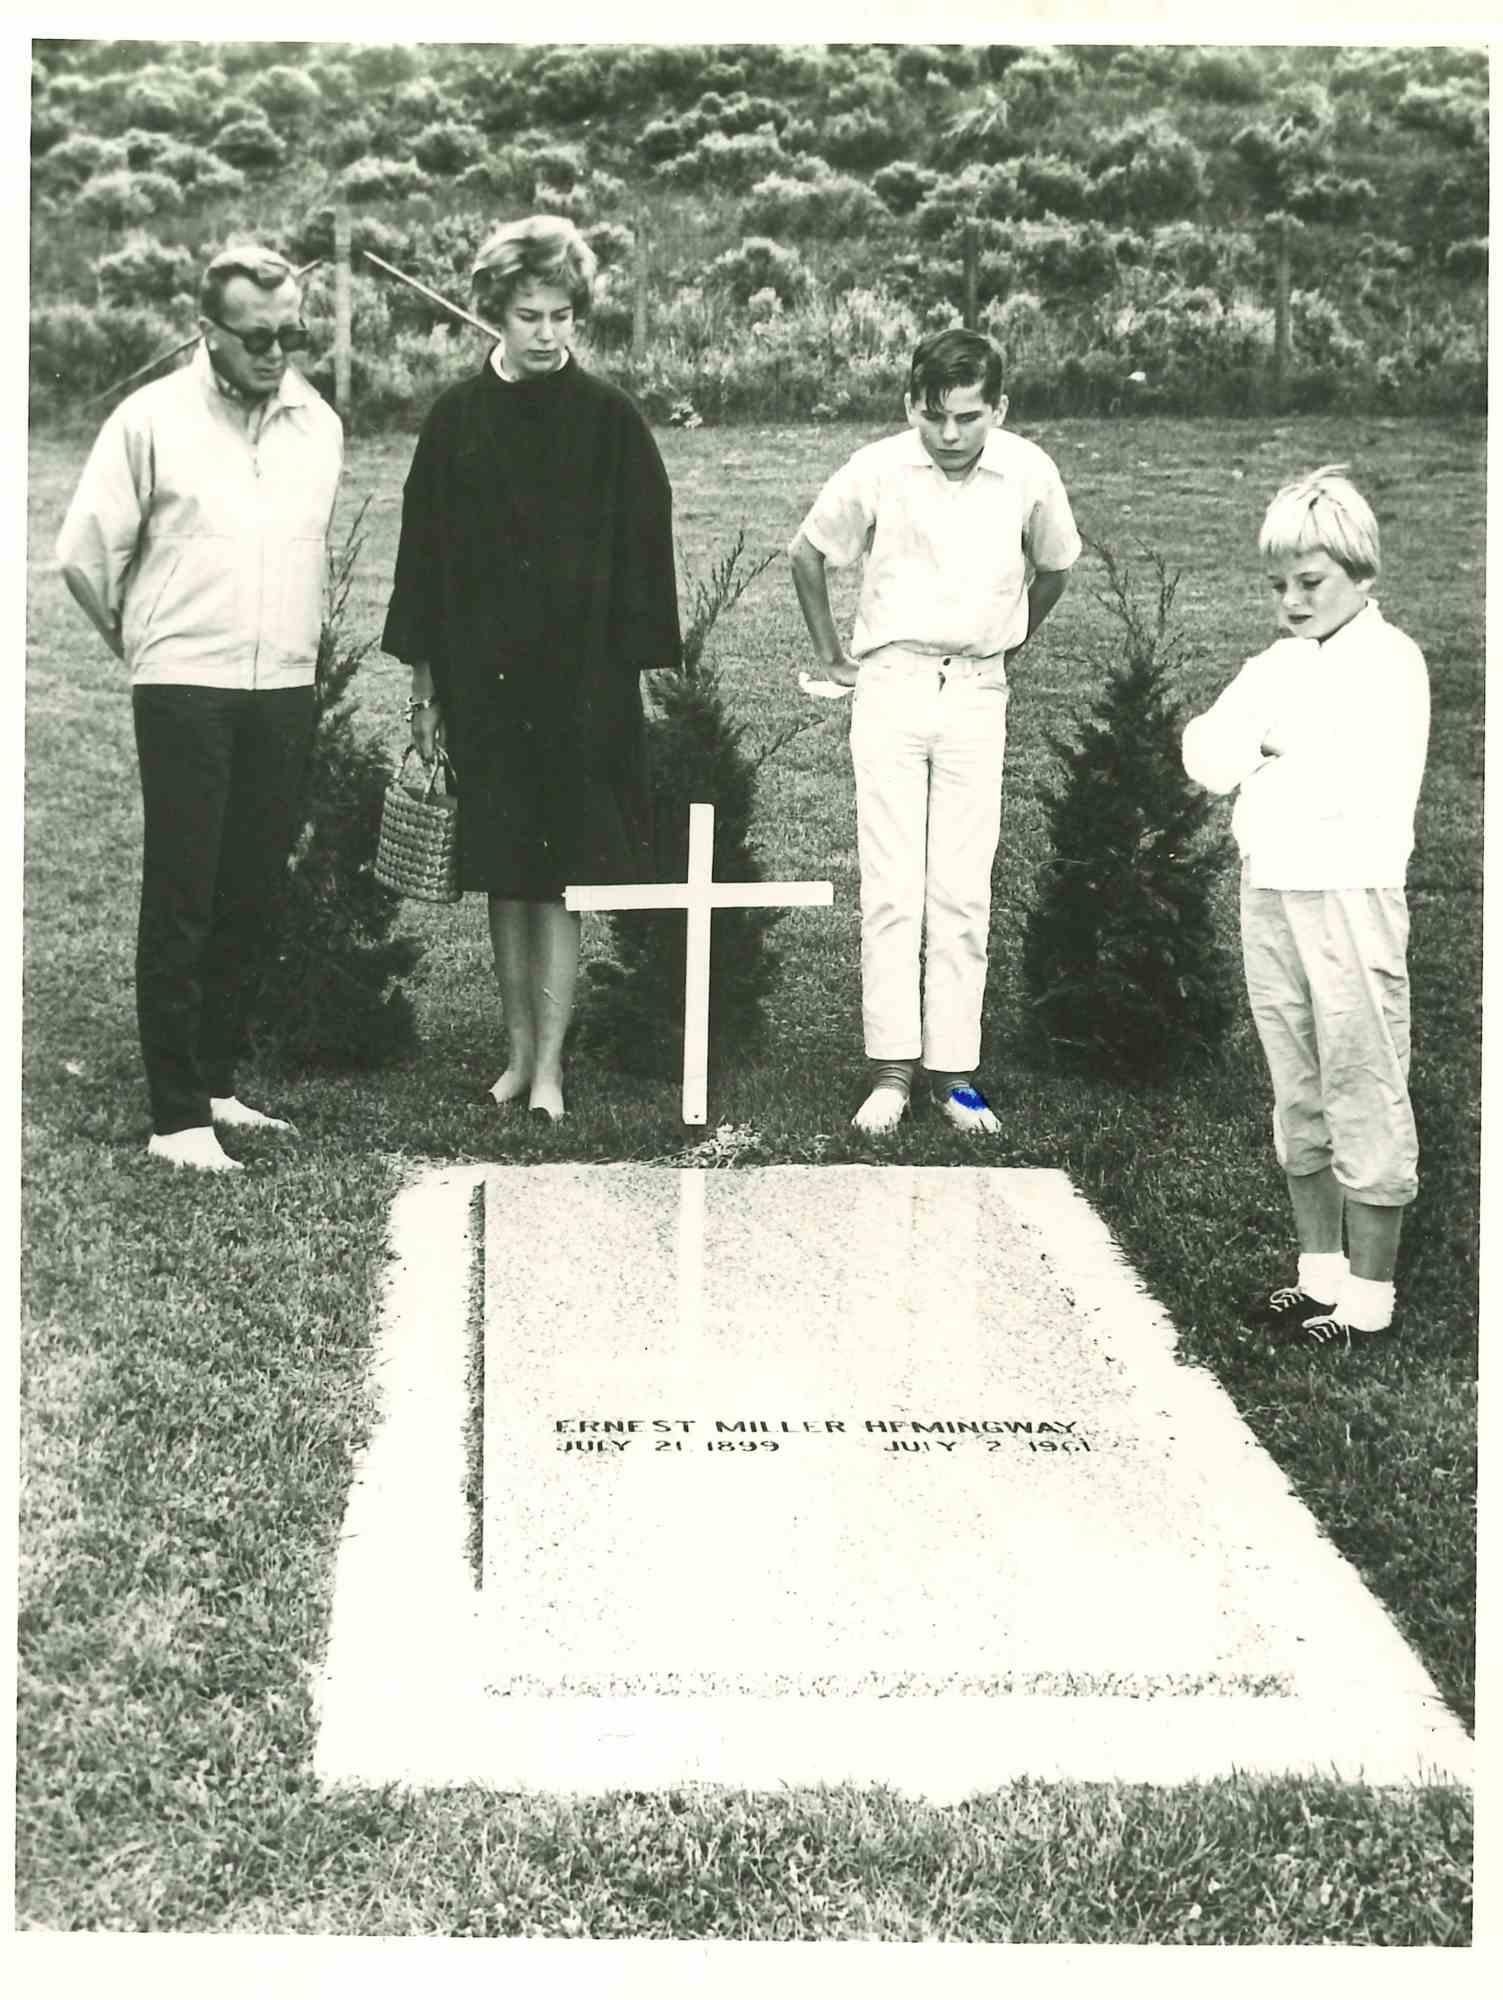 Ernest Hemingway's Grave - Vintage Photograph - 1962